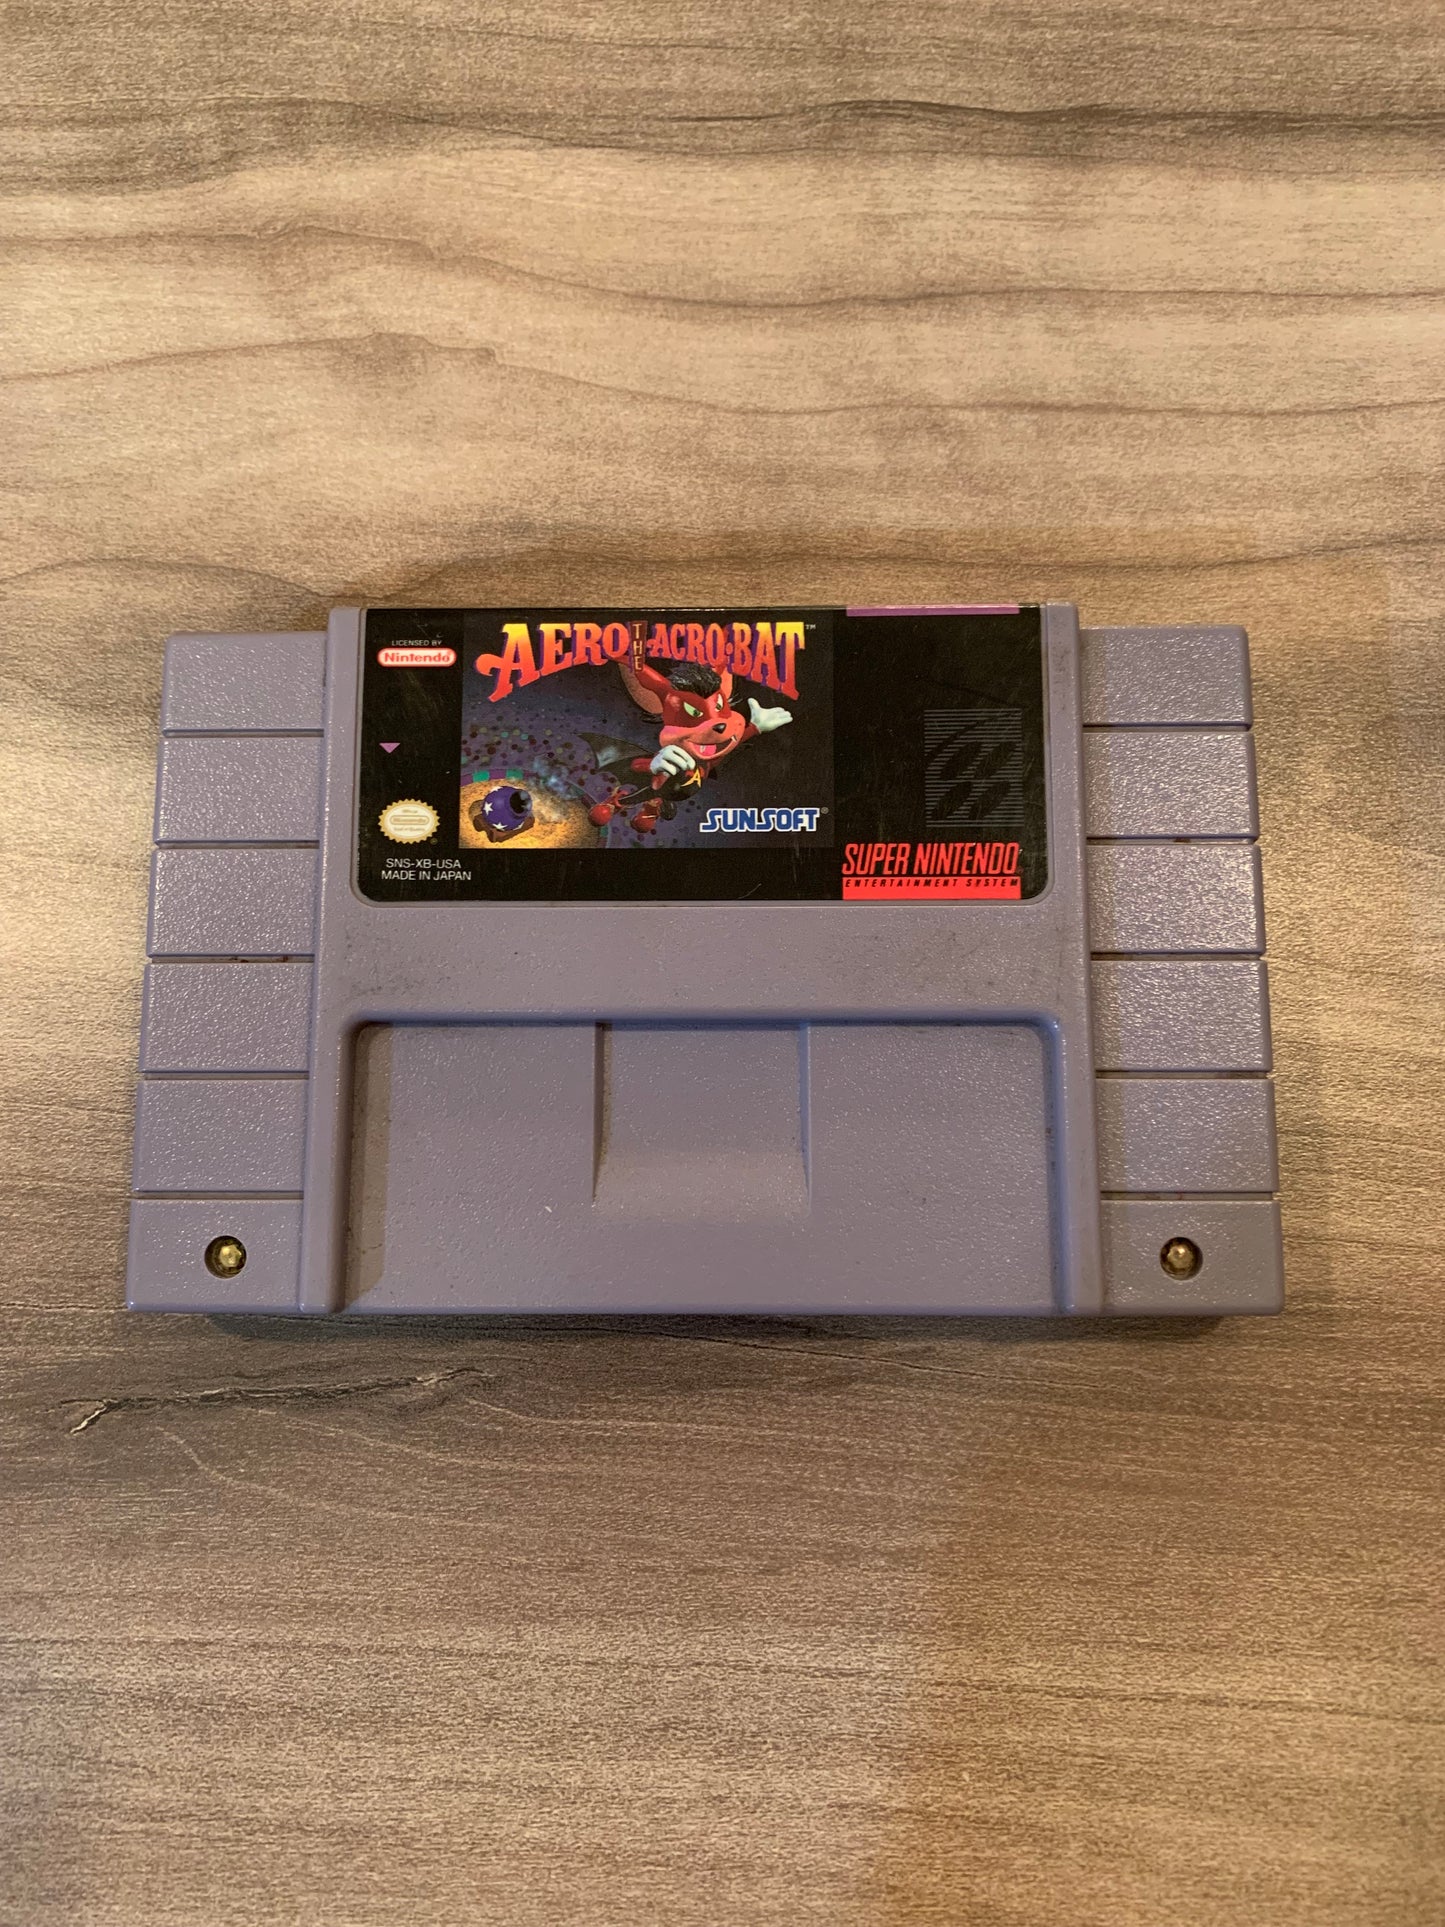 PiXEL-RETRO.COM : SUPER NINTENDO NES (SNES) GAME NTSC AERO THE ACRO-BAT